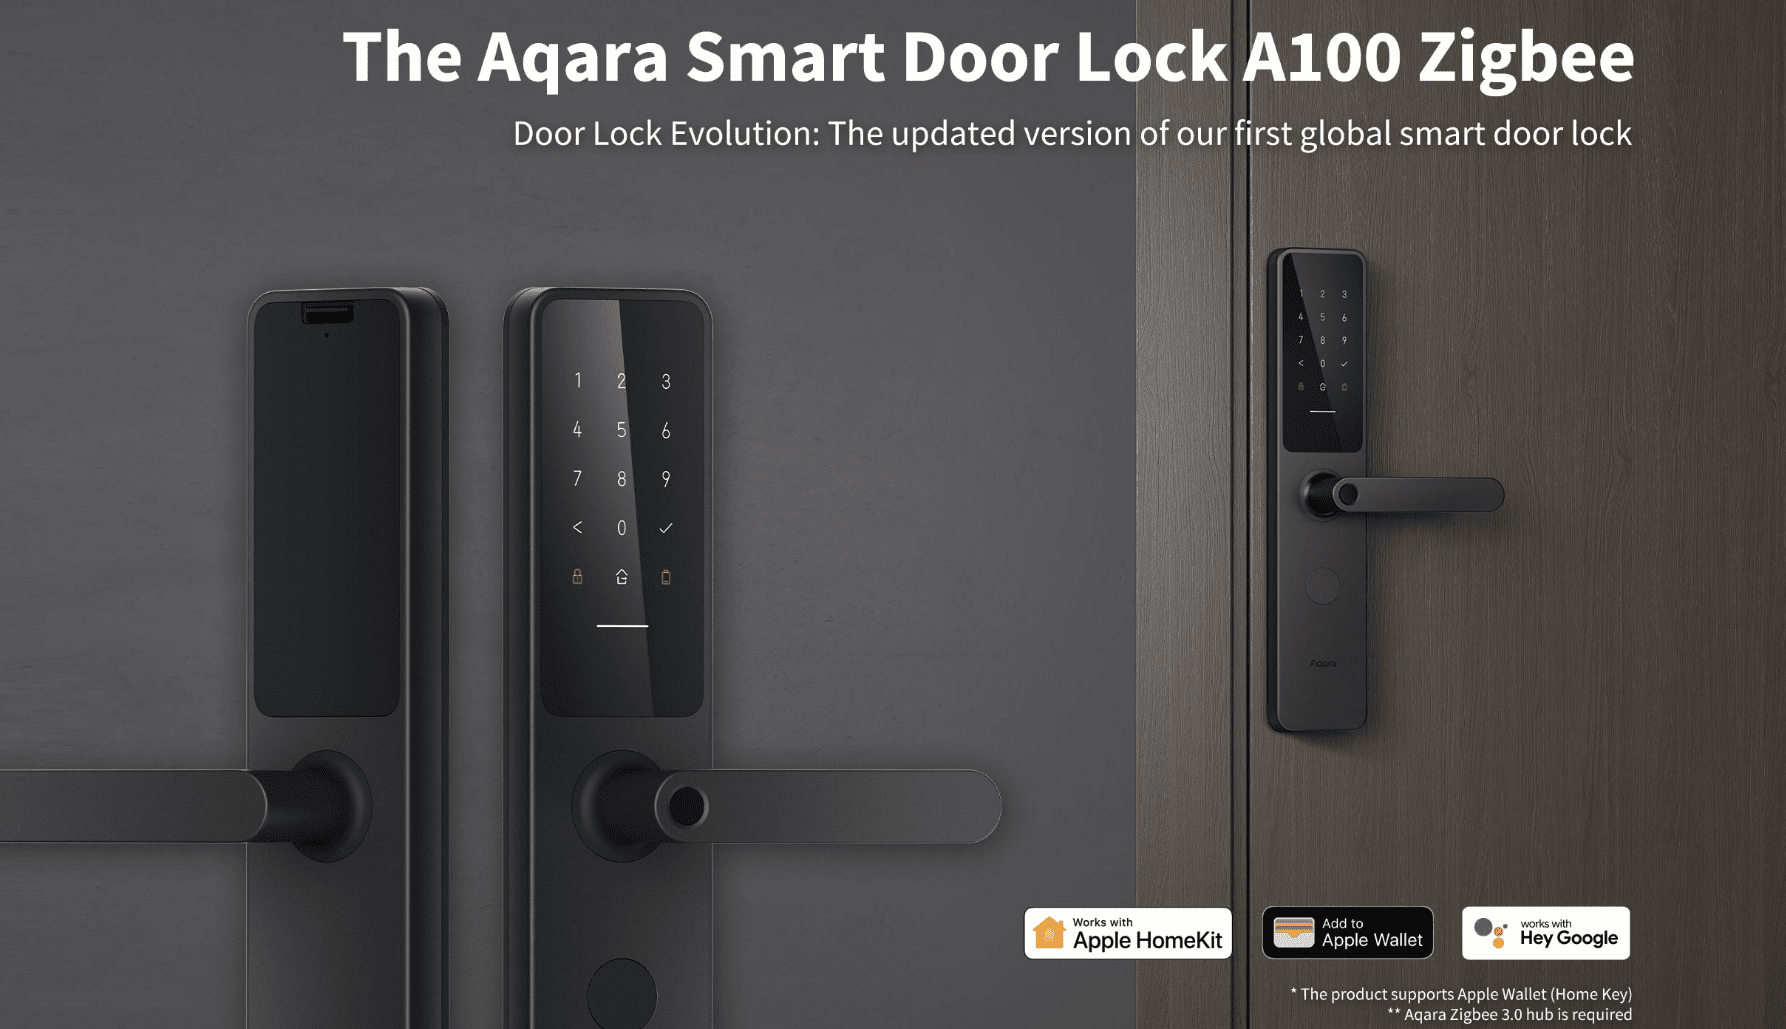 Aqara A100 Zigbee Smart Door Lock Launched with Apple Home Key Support